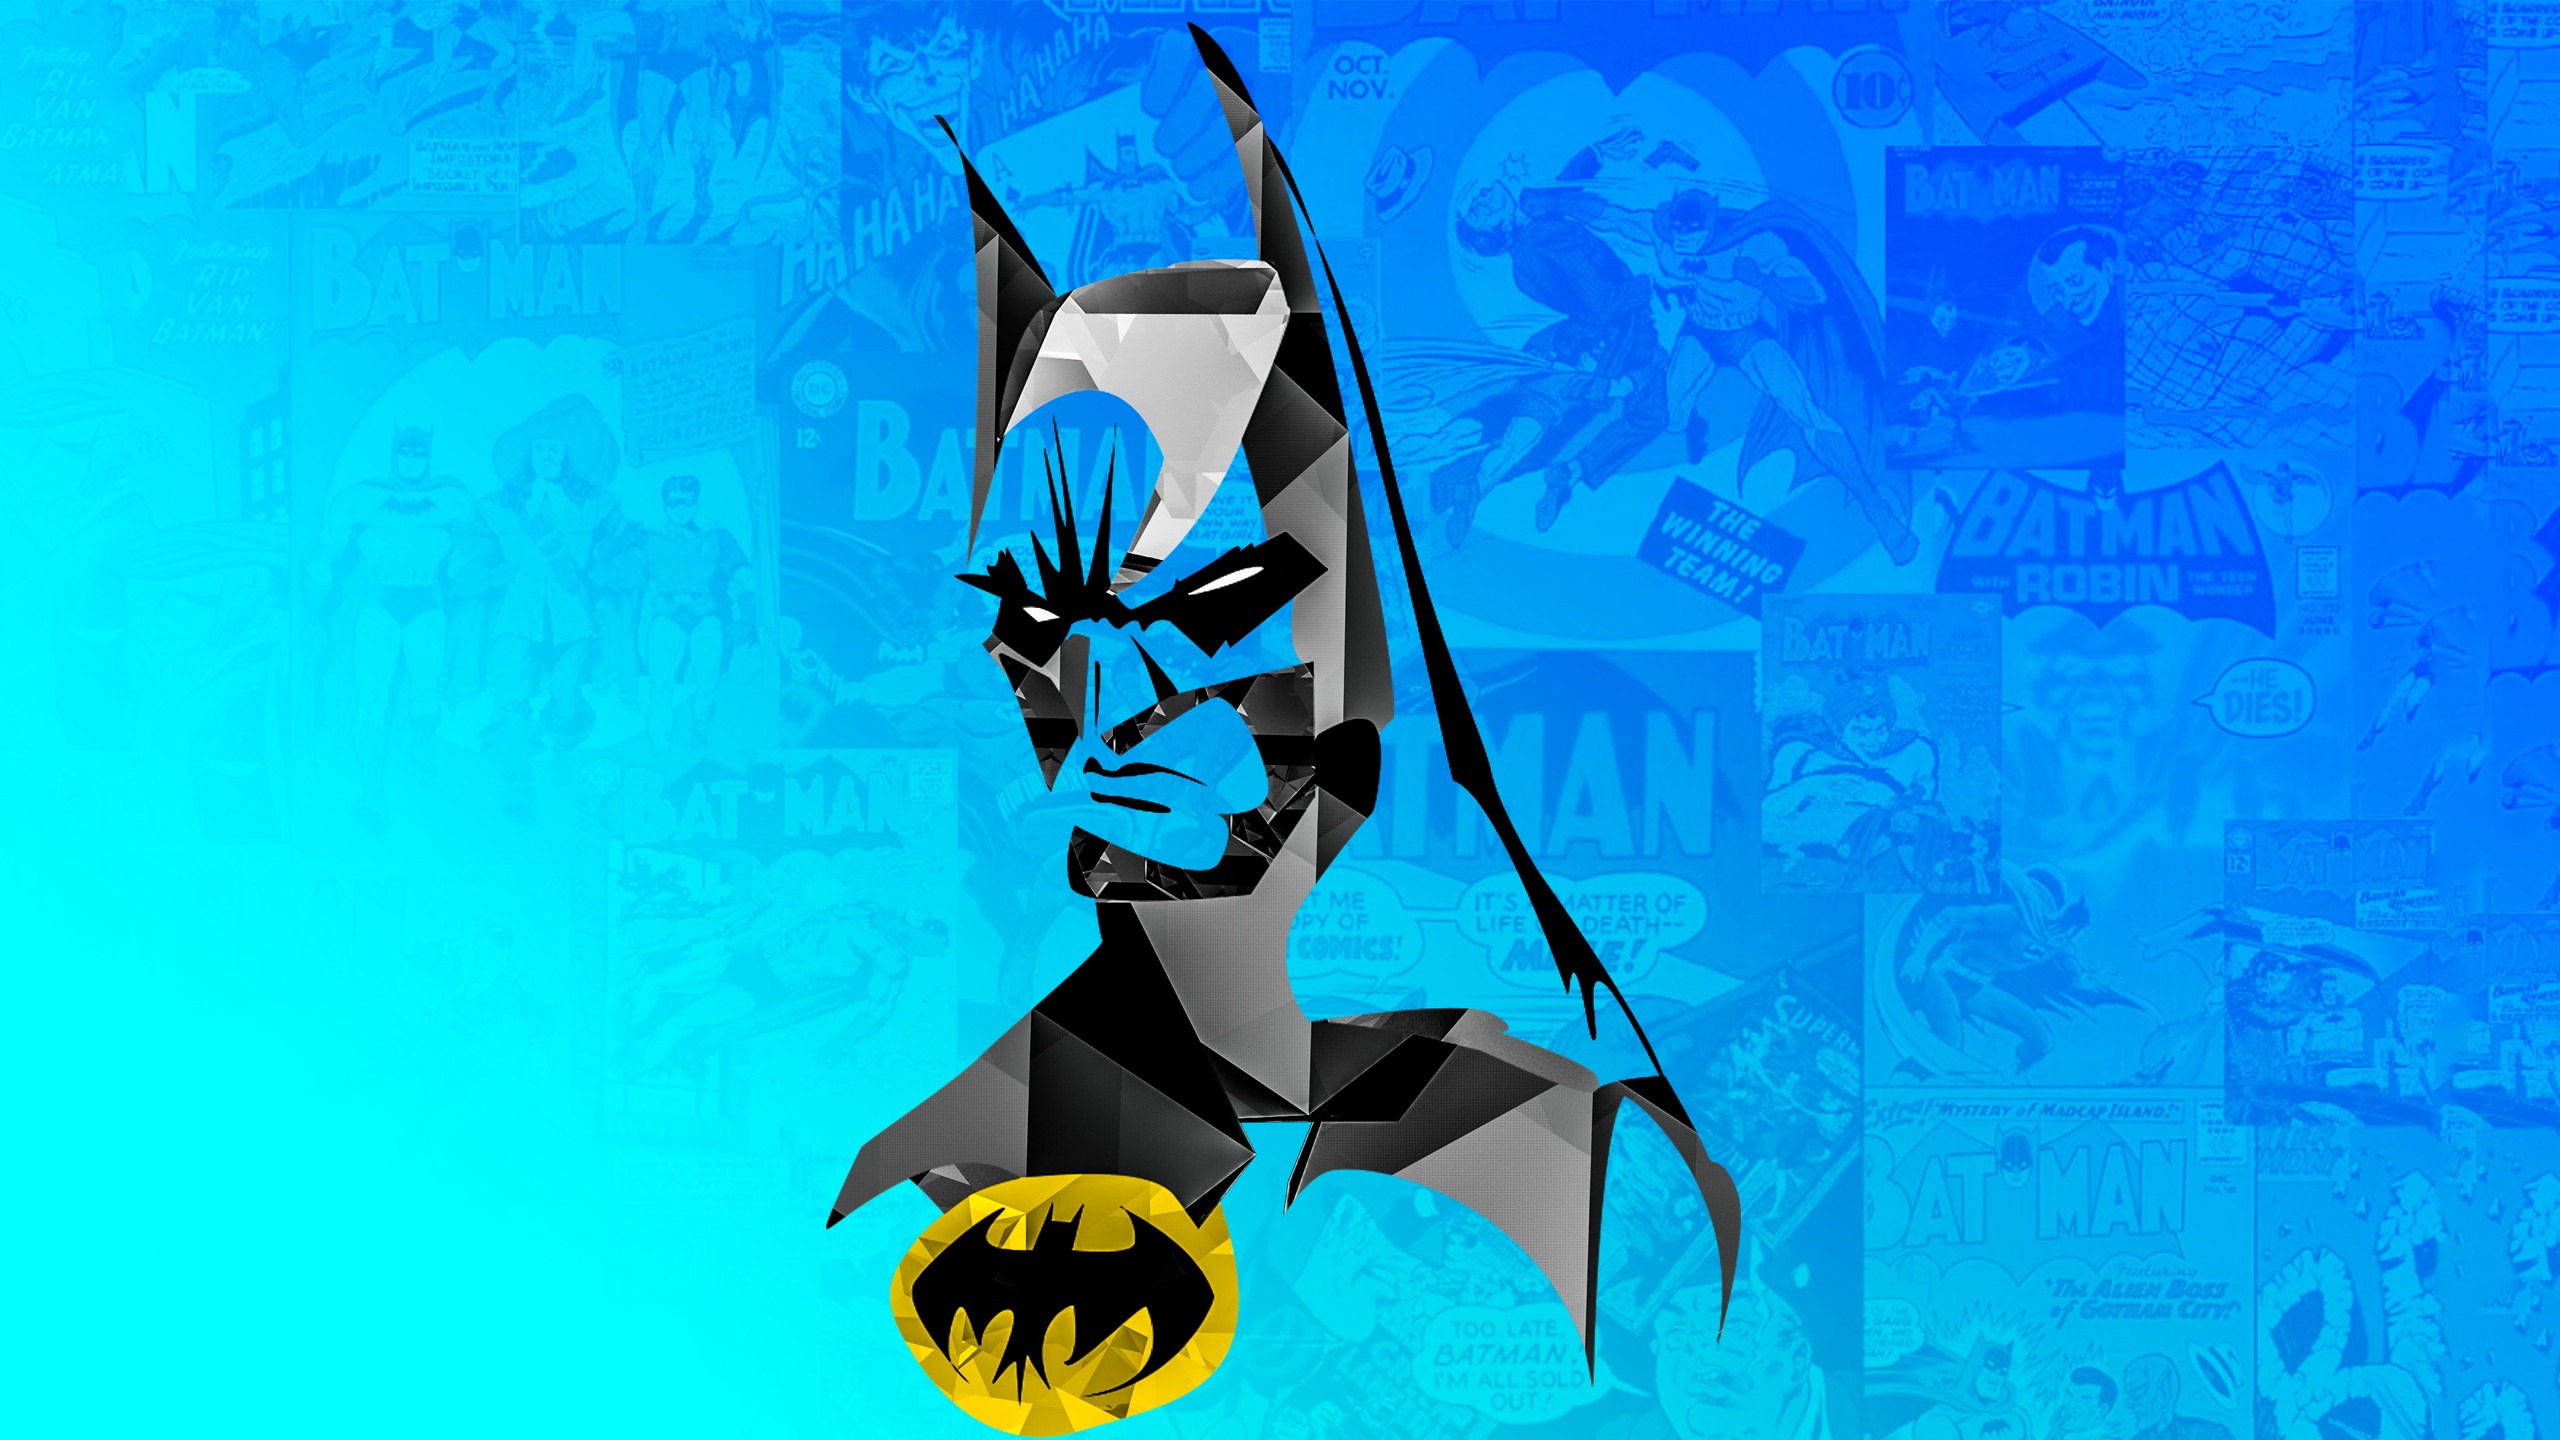 General 2560x1440 Batman DC Comics cyan blue comic art logo Batman logo artwork digital art